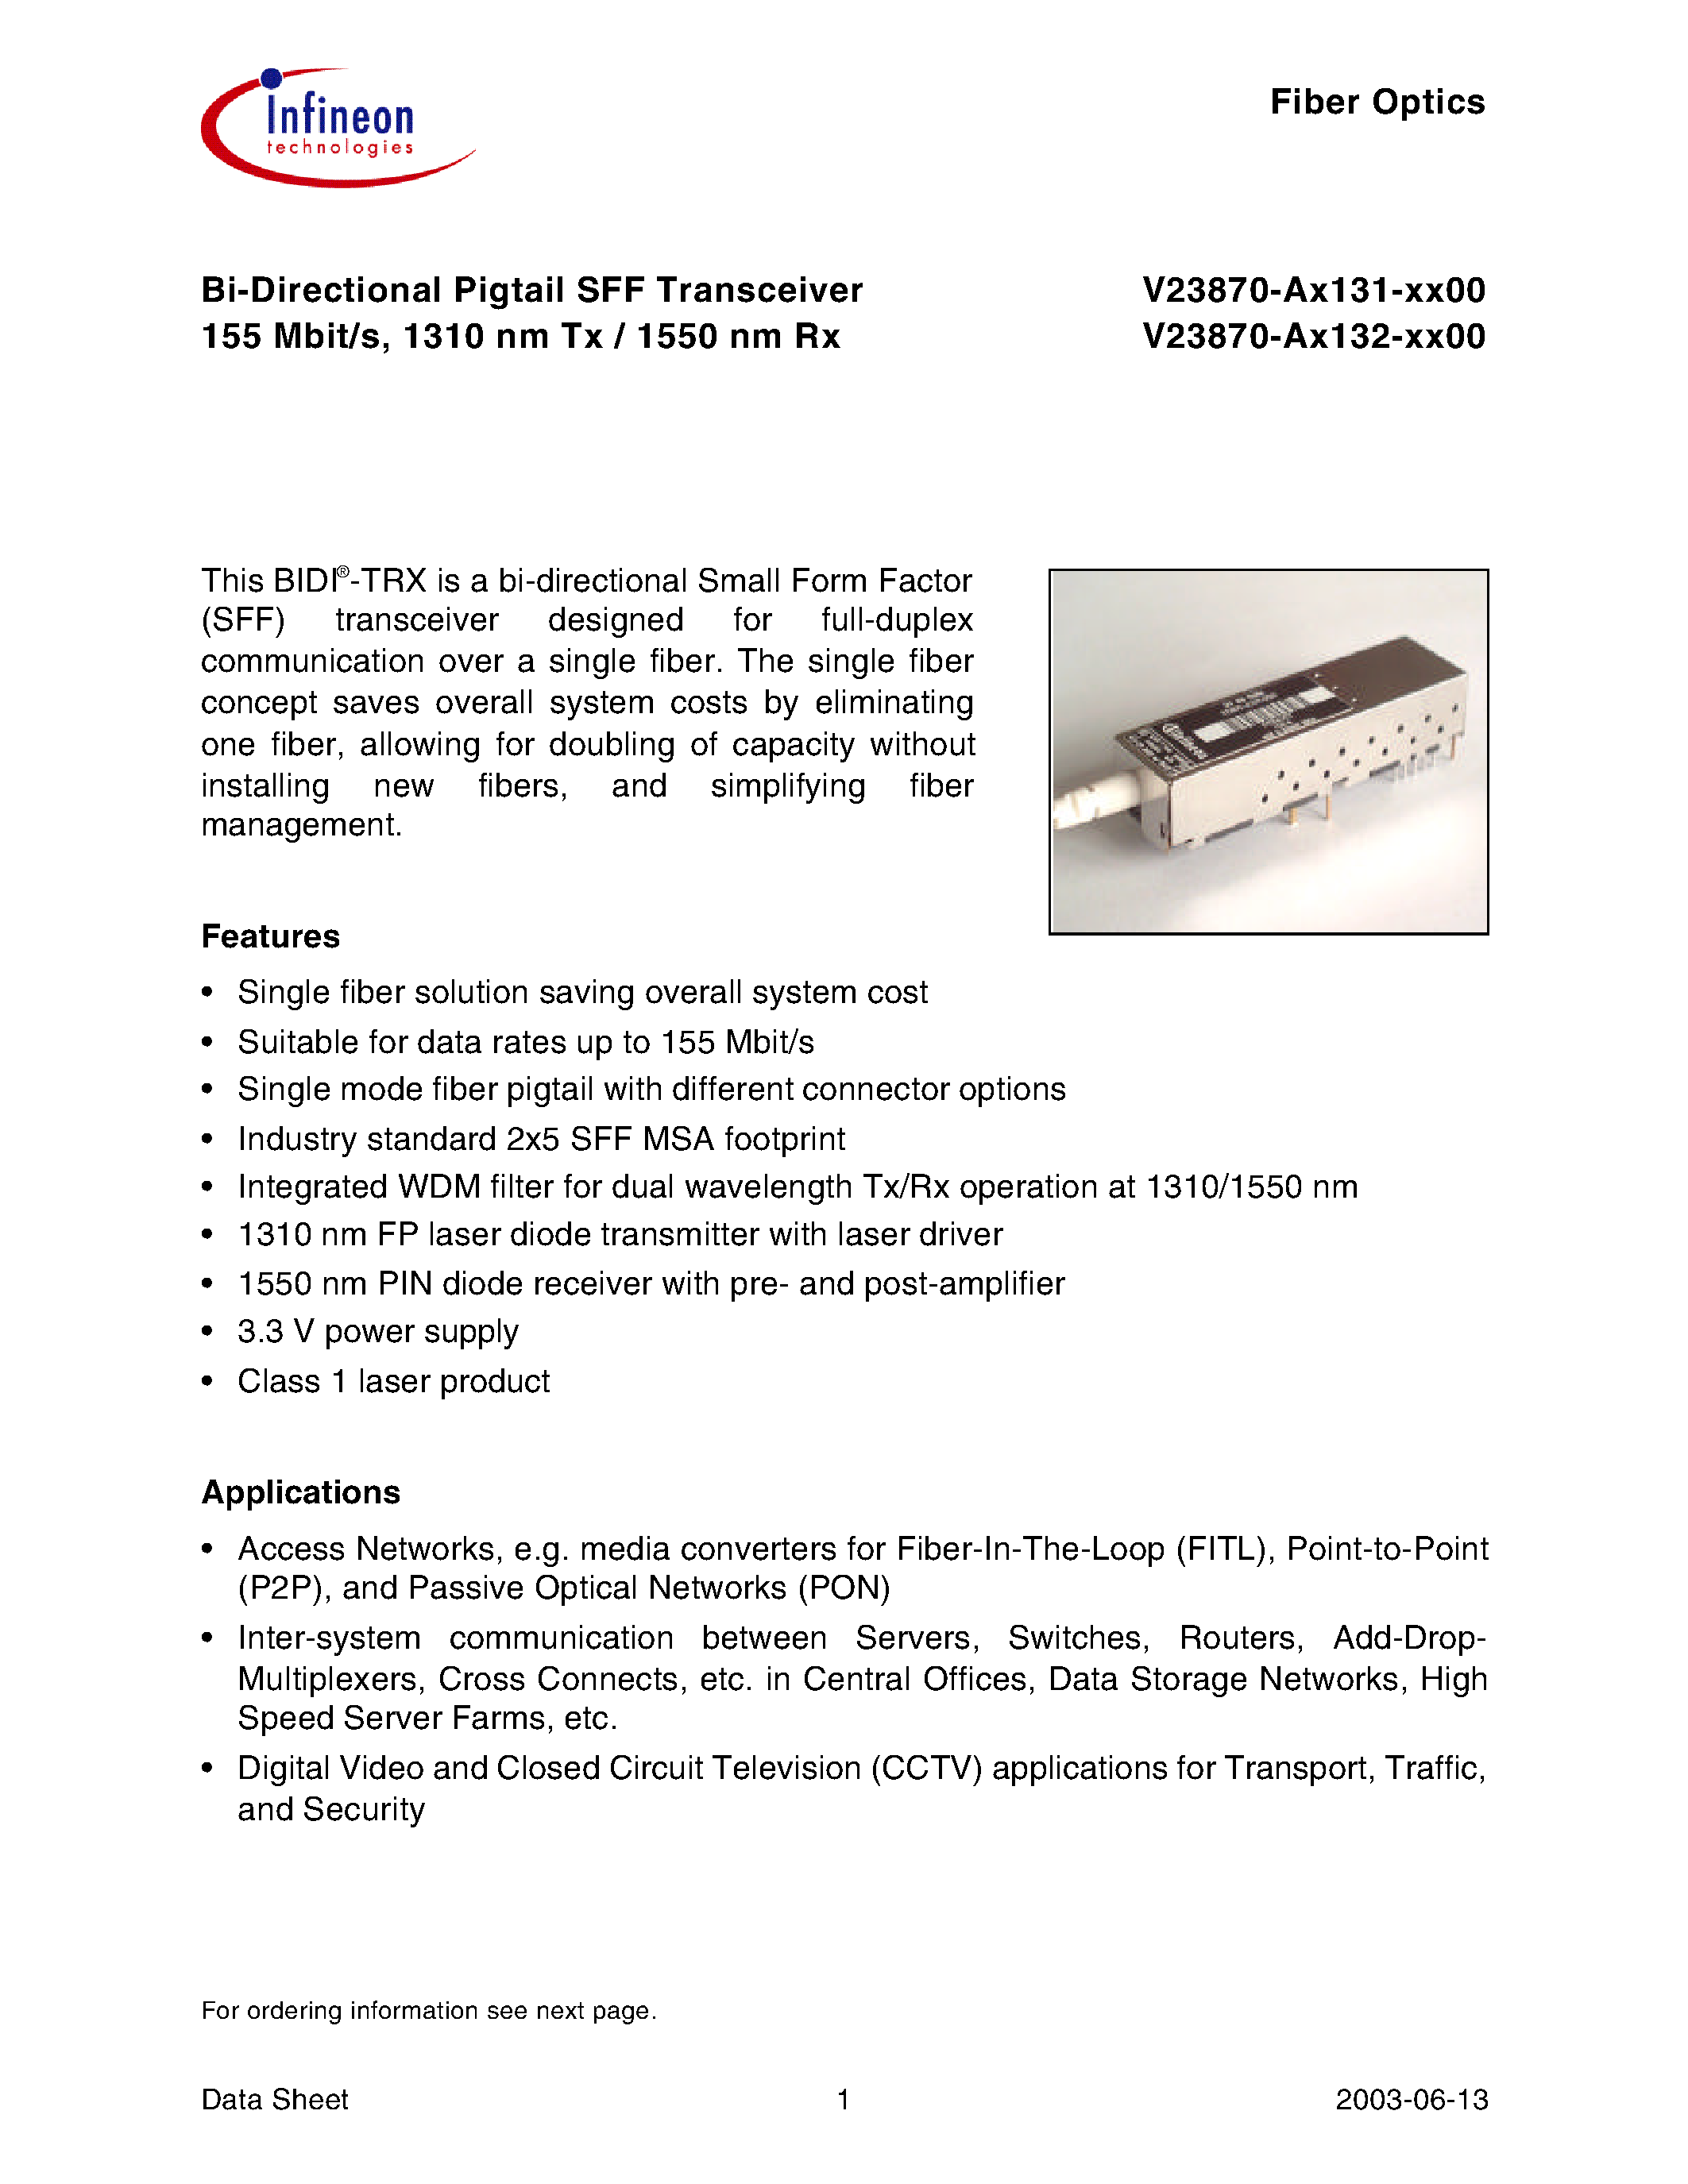 Даташит V23870-A3132-A100 - Bi-Directional Pigtail SFF Transceiver 155 Mbit/s/ 1310 nm Tx / 1550 nm Rx страница 1